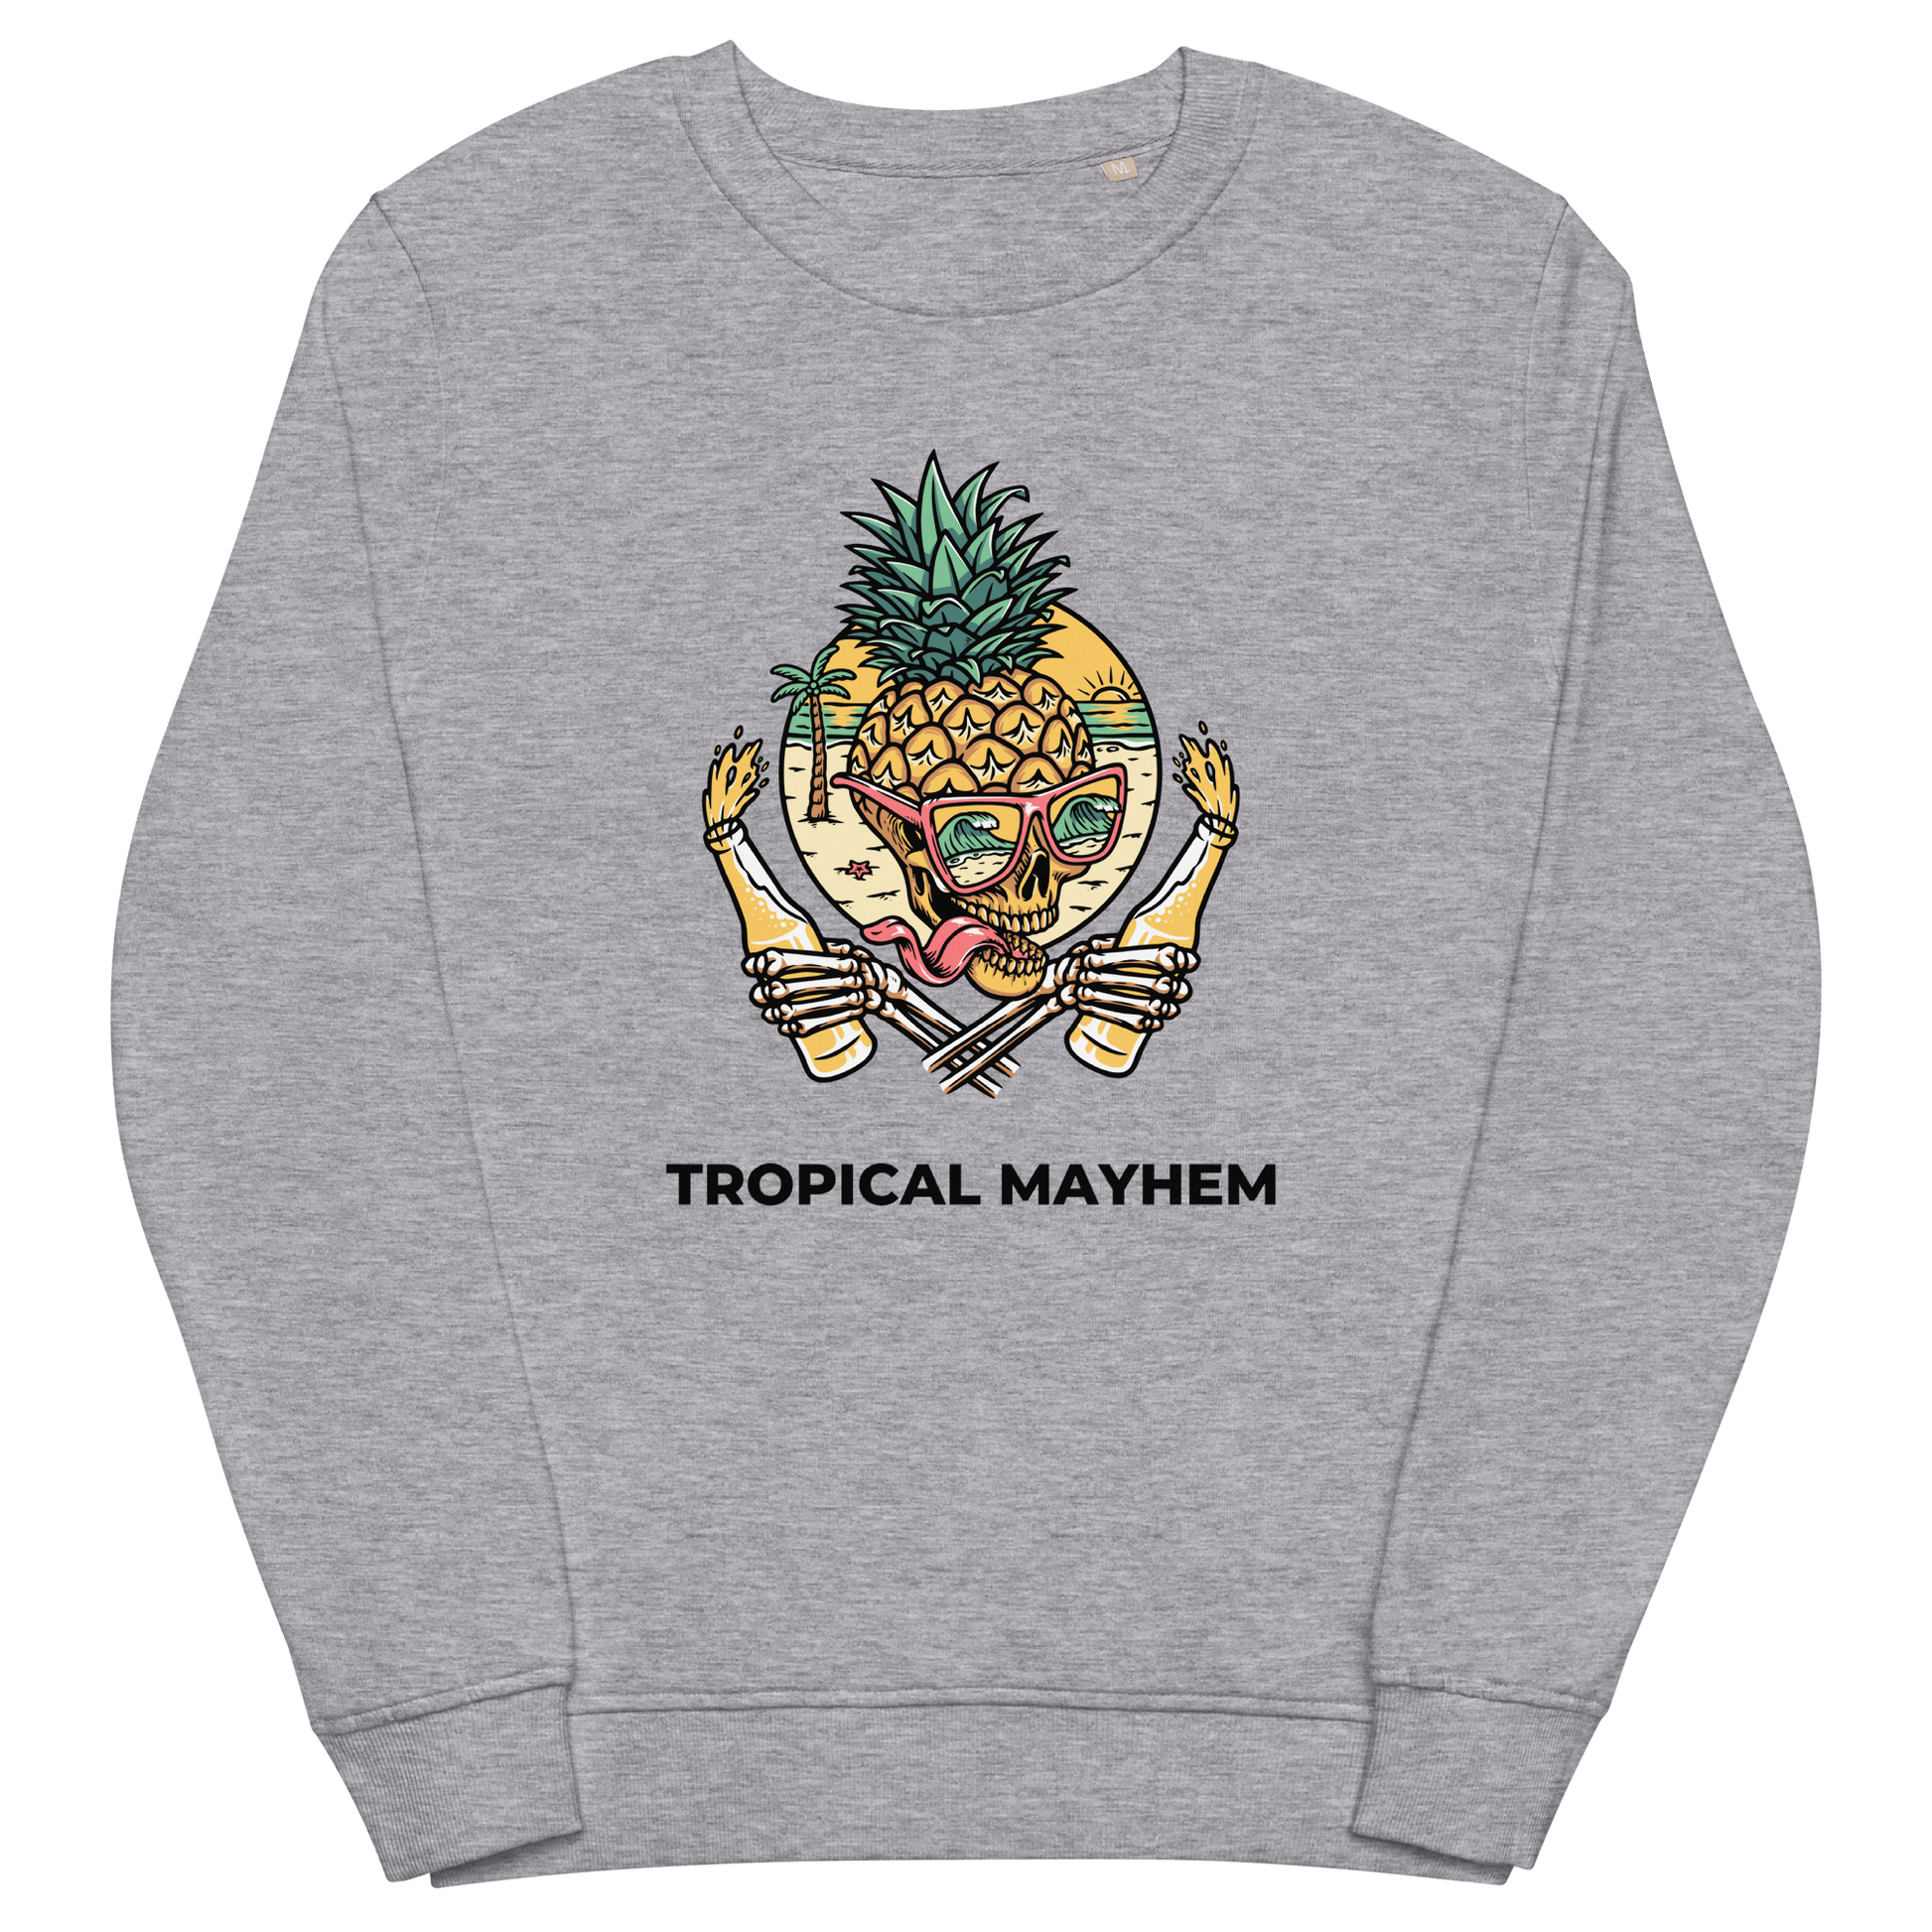 Grey Melange Organic Cotton Tropical Mayhem Sweatshirt featuring a Crazy Pineapple Skull graphic on the chest - Funny Graphic Pineapple Sweatshirts - Boozy Fox